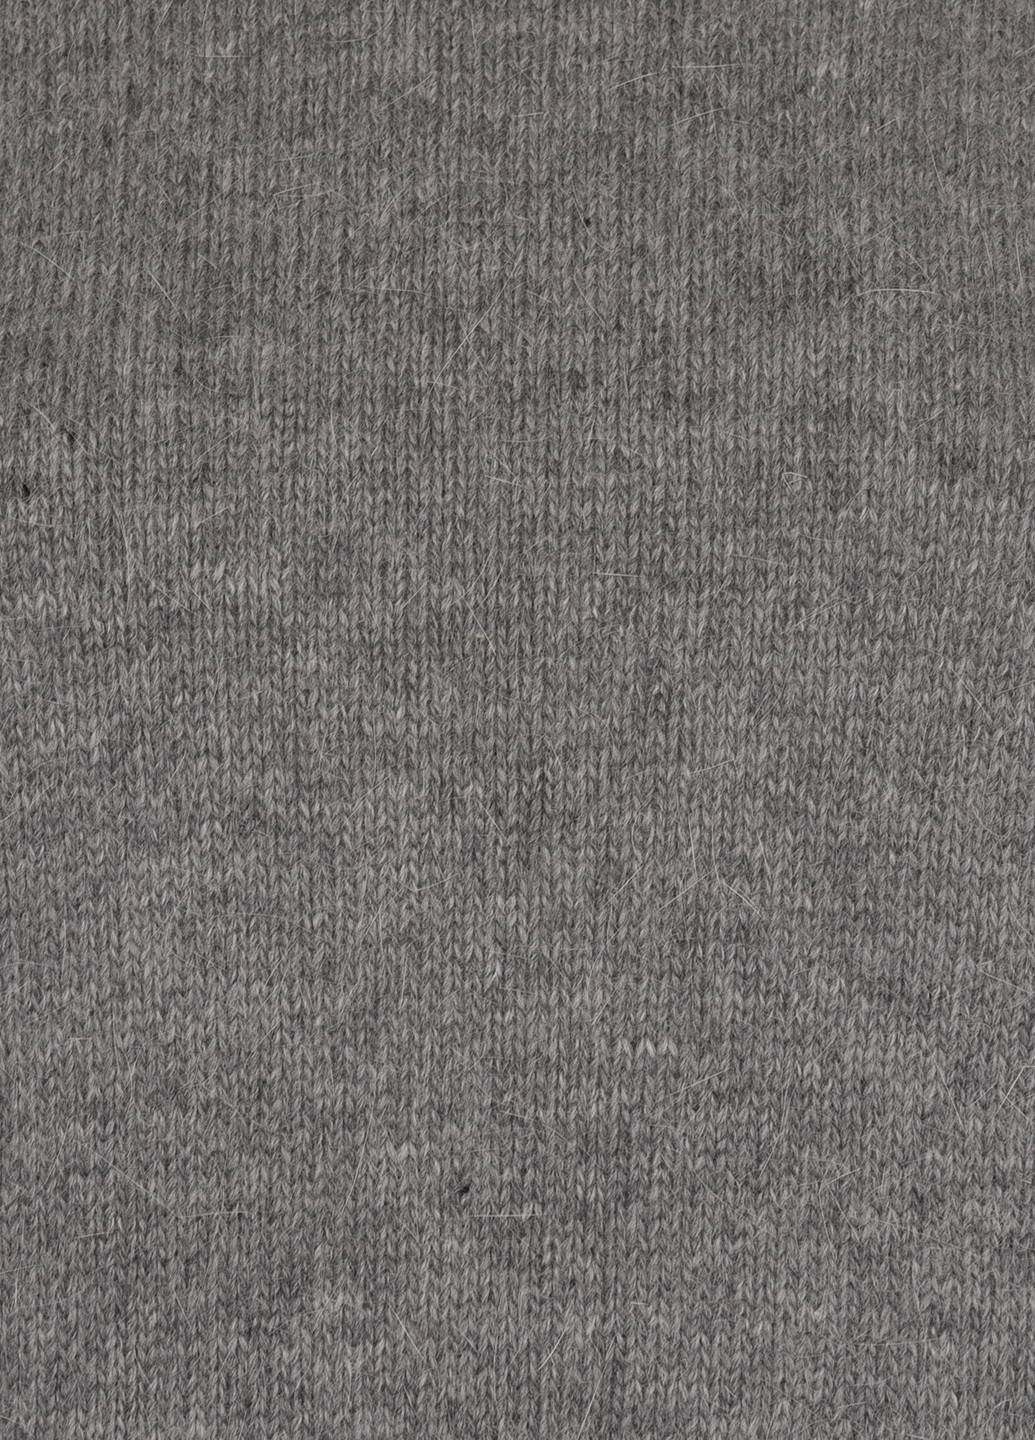 Серый демисезонный свитер джемпер LOVE REPUBLIC